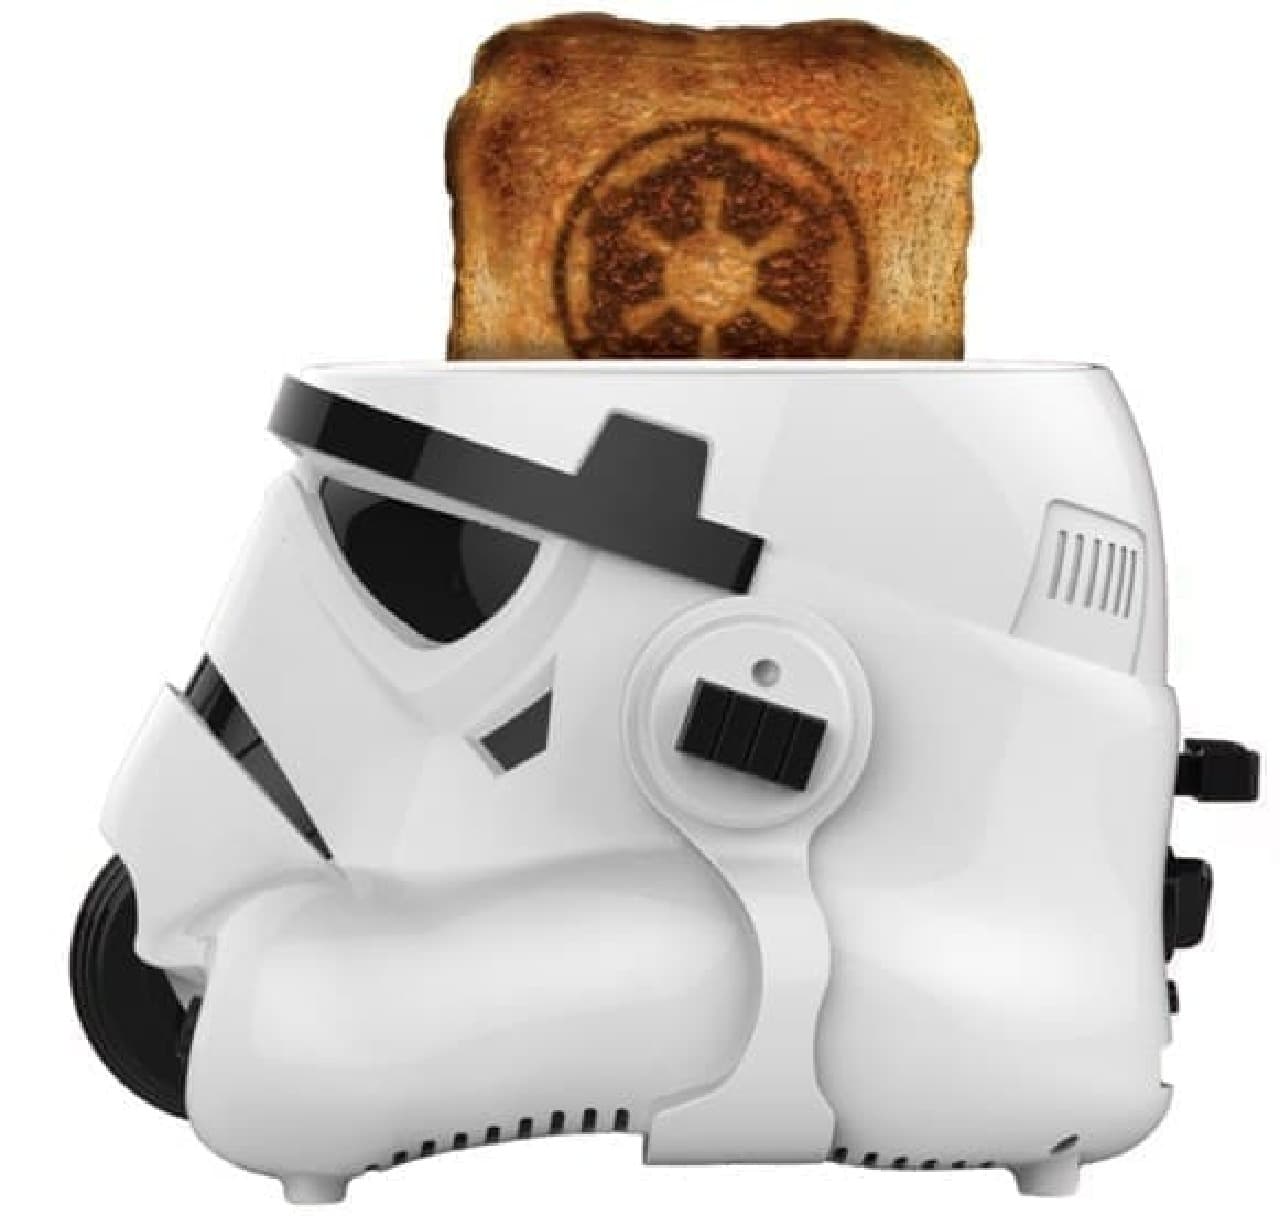 Star Wars "Storm Trooper" Toaster